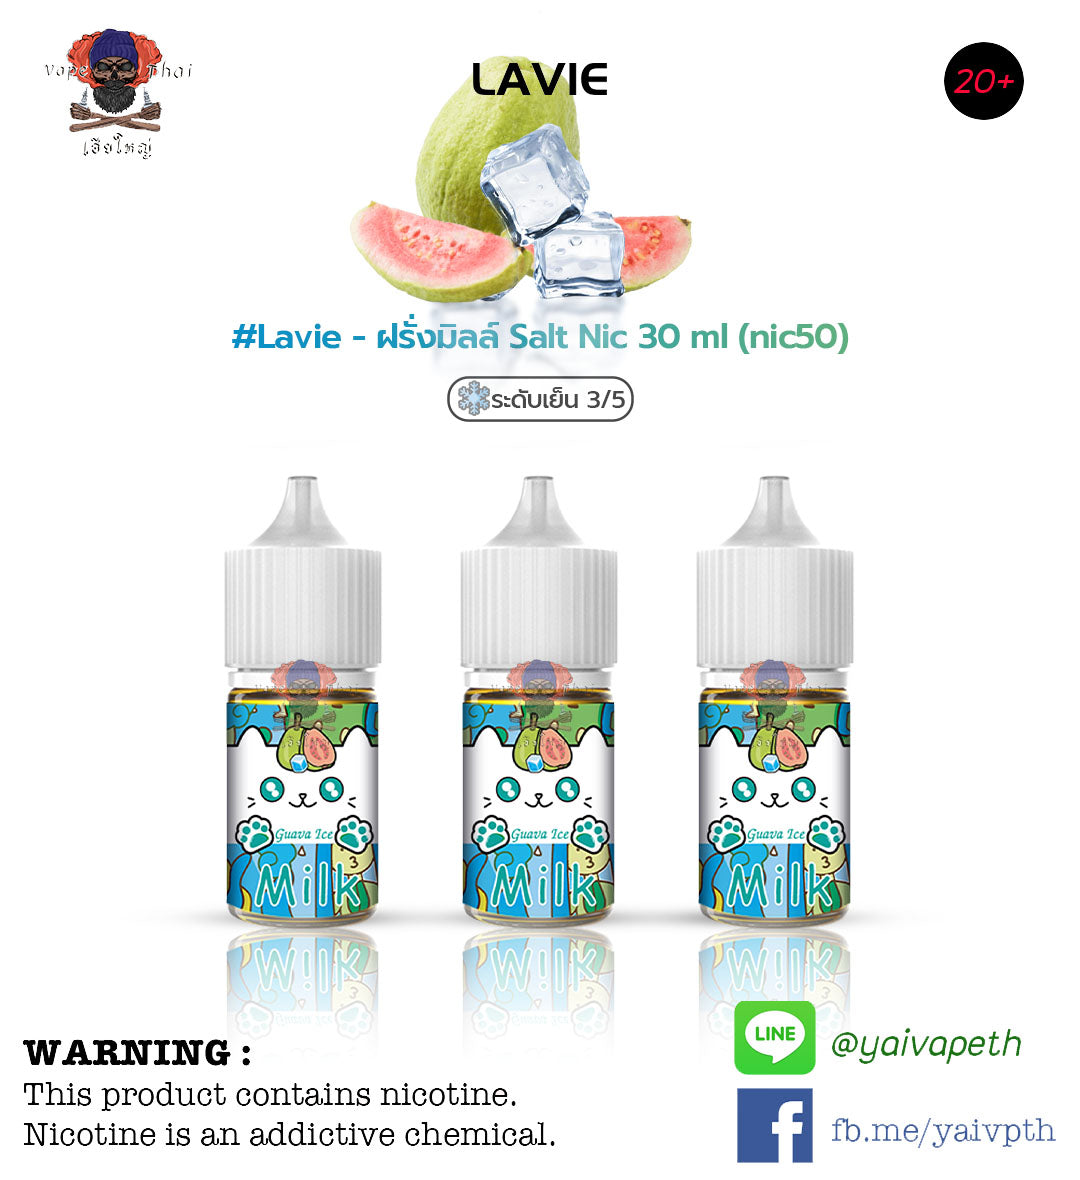 Lavie Milk Salt Nic 30ml NIC50